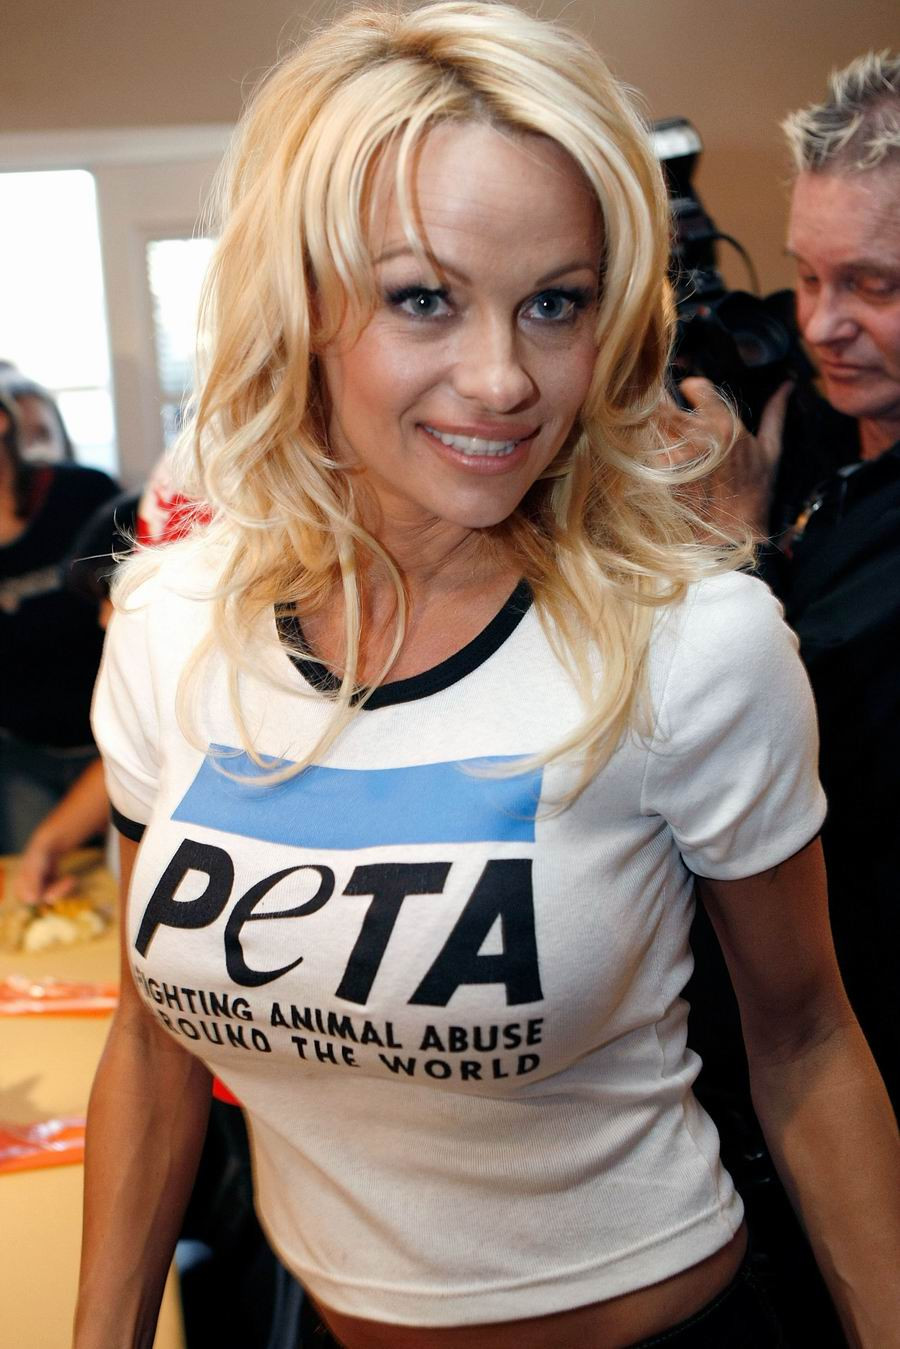 Памела Андерсон (Pamela Anderson)